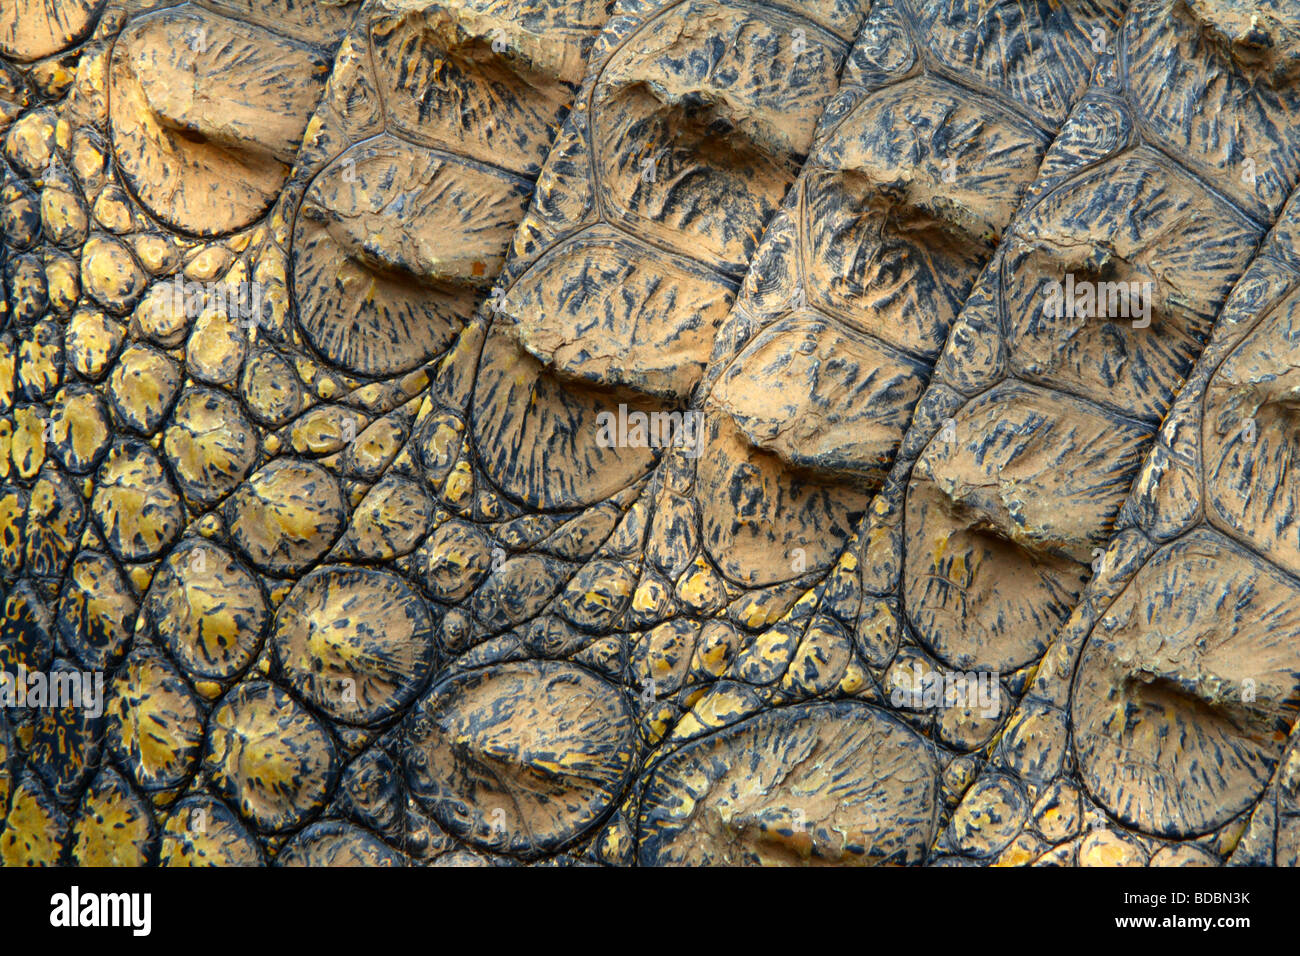 Macro photograph of skin or hide of a Nile Crocodile (crocodylus Niloticus) at the Kwena Crocodile Farm, South Africa Stock Photo